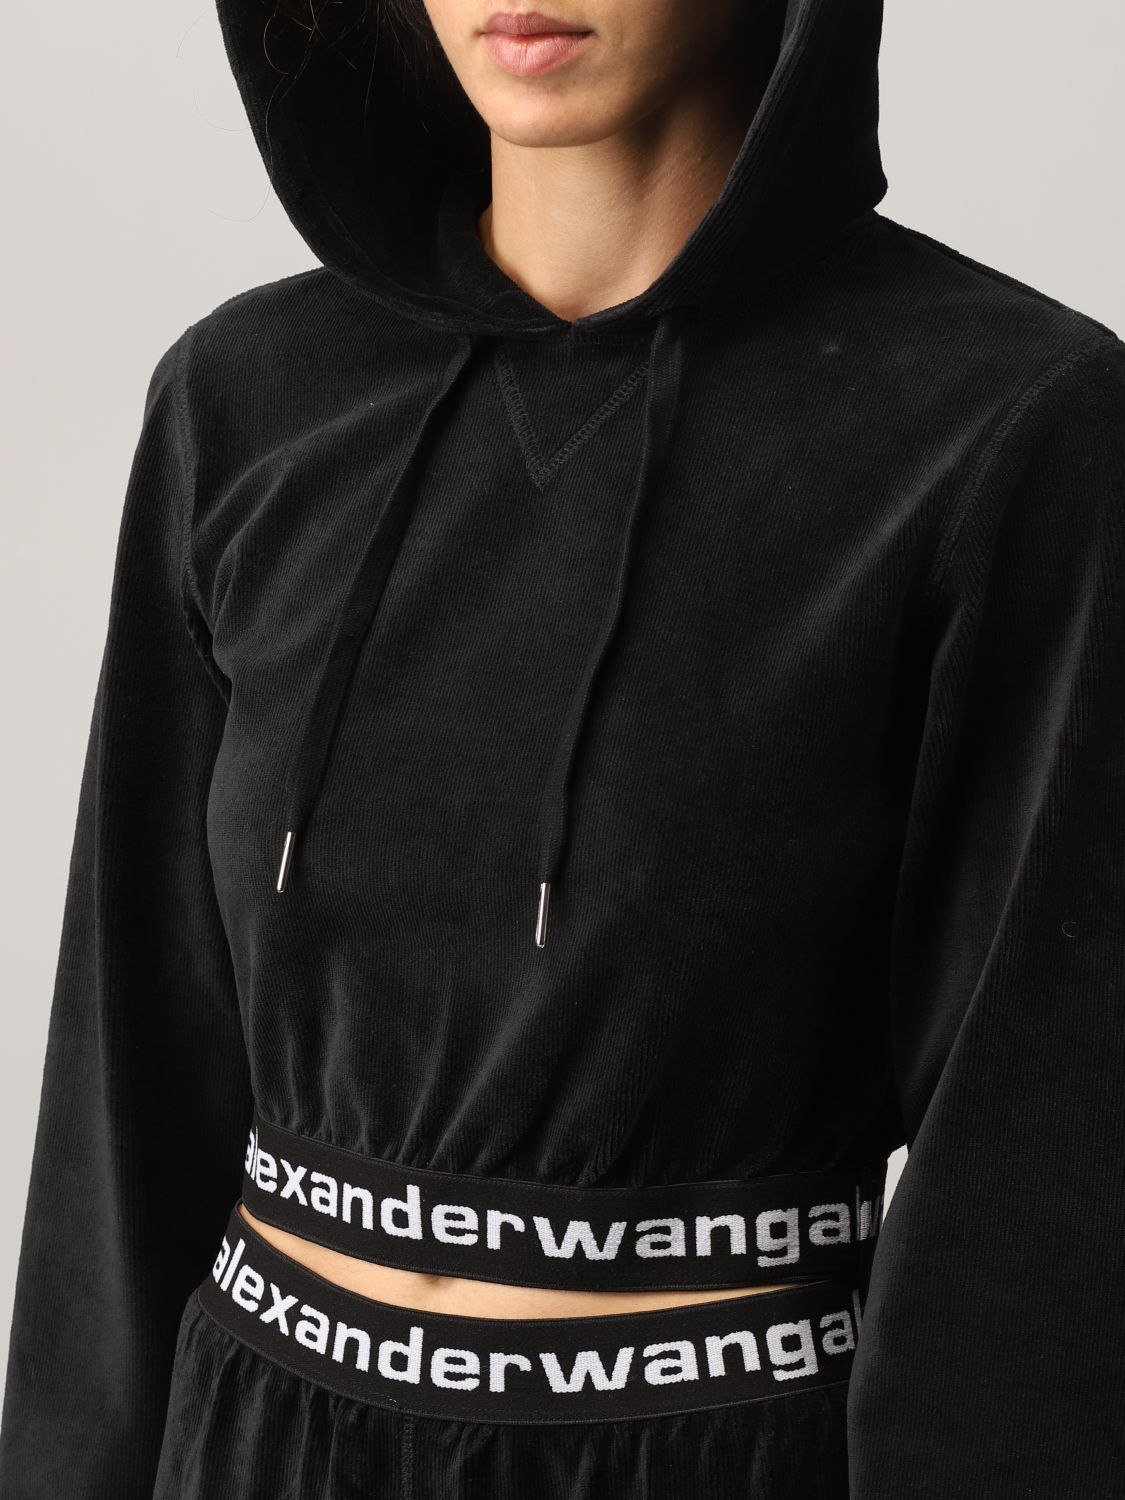 T By Alexander Wang sweatshirt for woman